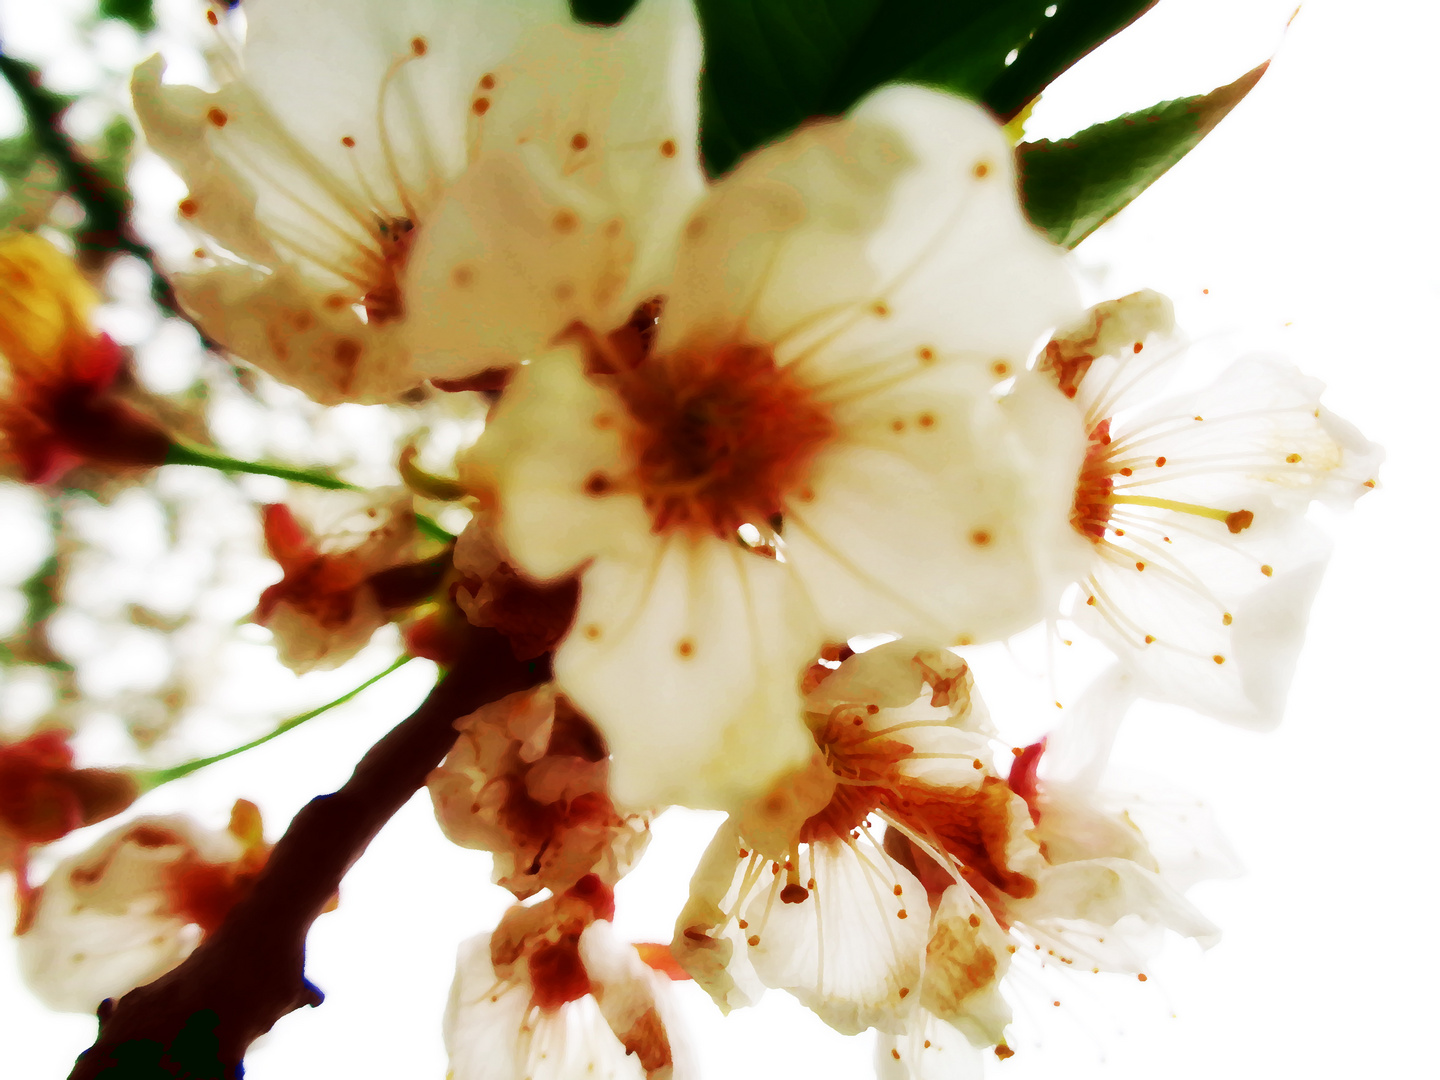 Cherry blossoms (III)